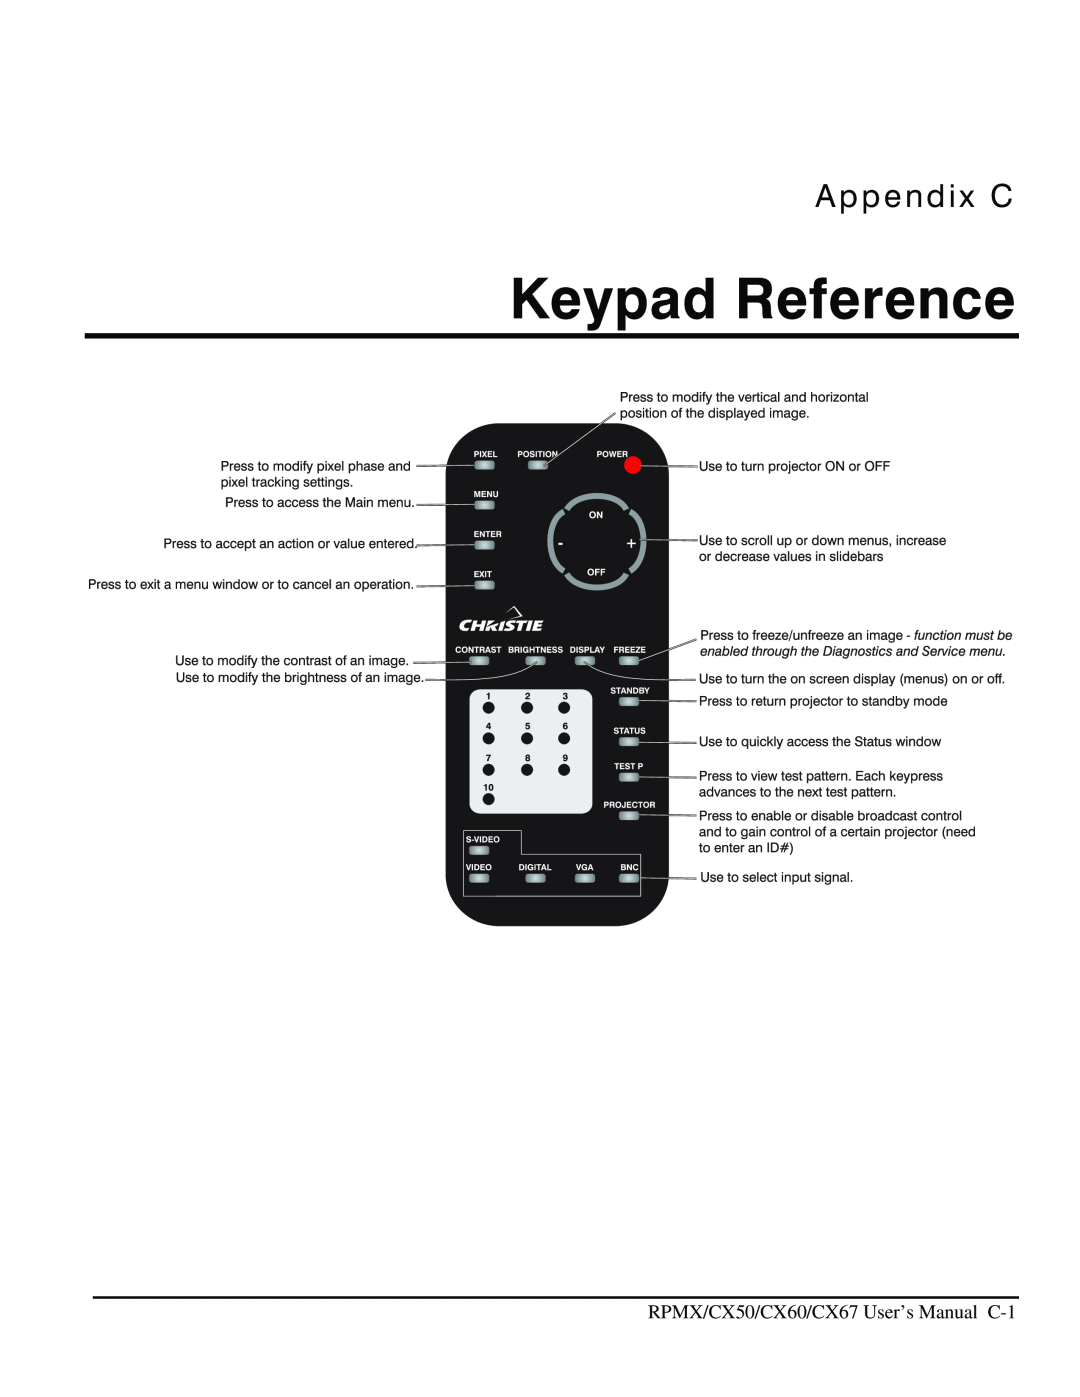 Christie Digital Systems CX50, CX67, CX60 user manual Keypad Reference, Appendix C 